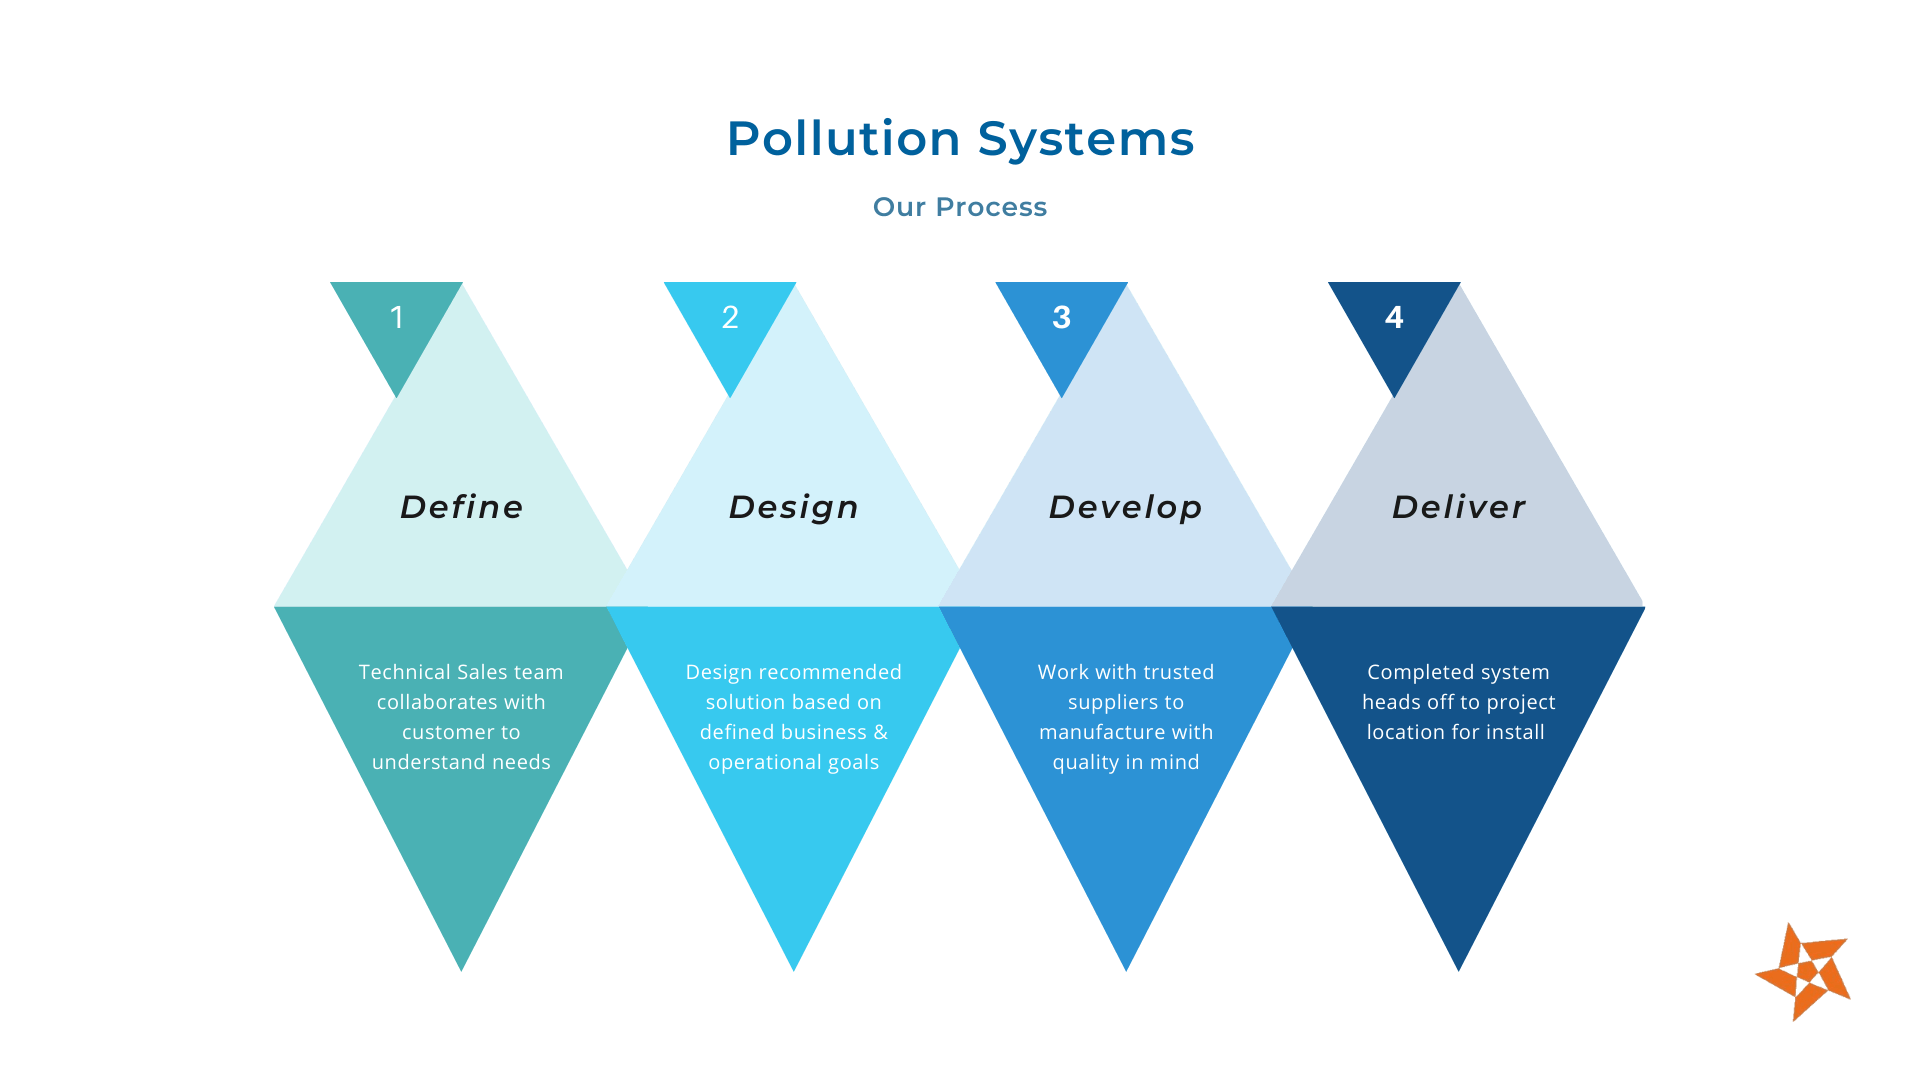 Pollution Systems 4D Design Process: Define, Design, Develop, Deliver